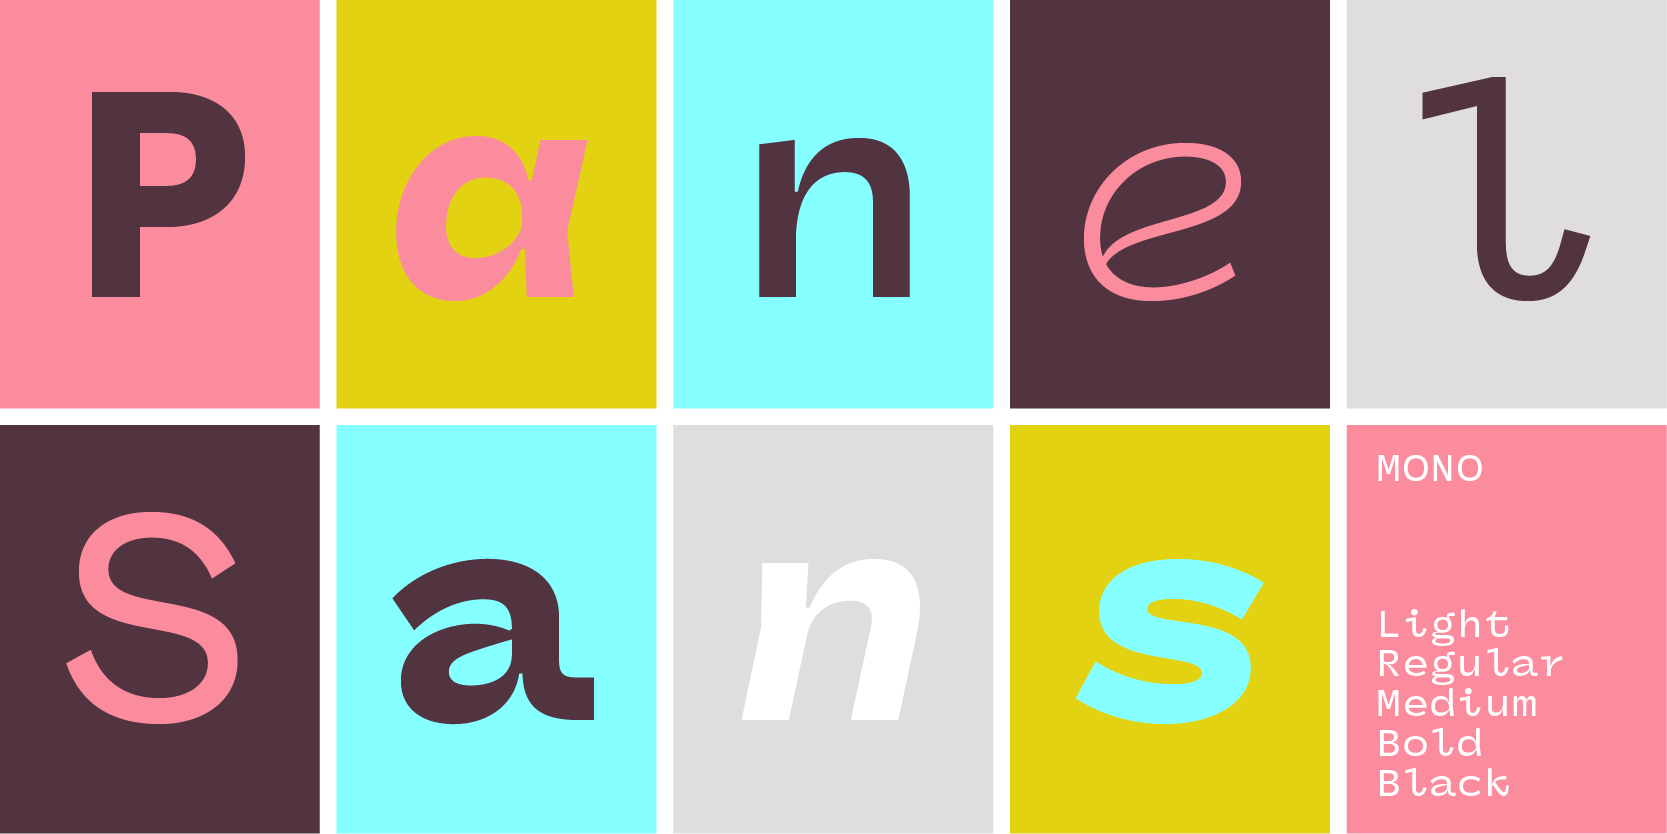 Card displaying Panel Sans Mono typeface in various styles